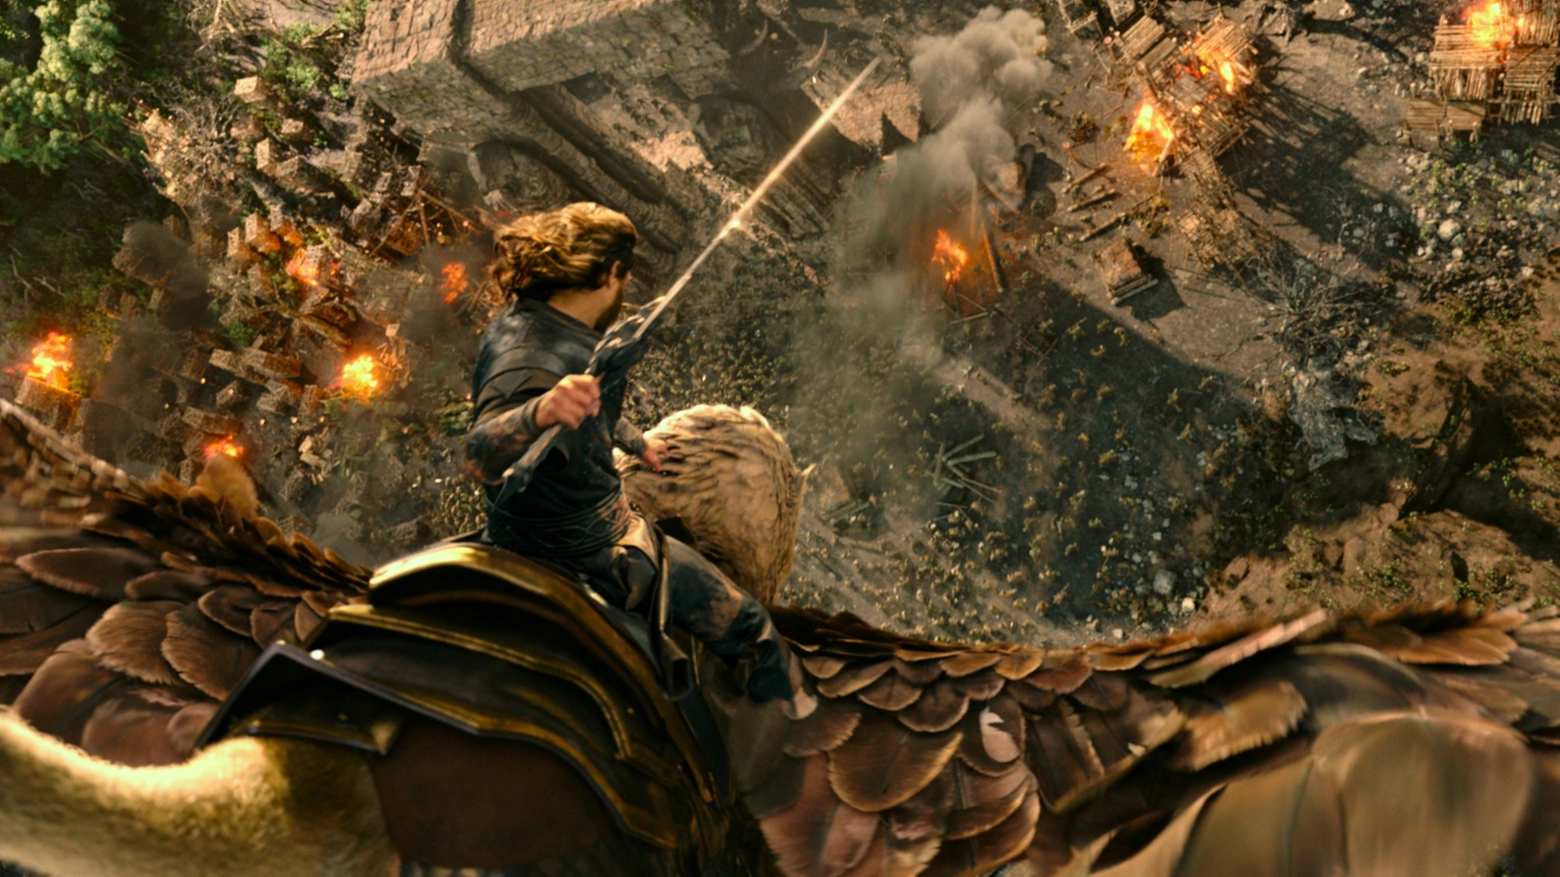 Un'immagine del trailer del film di Warcraft